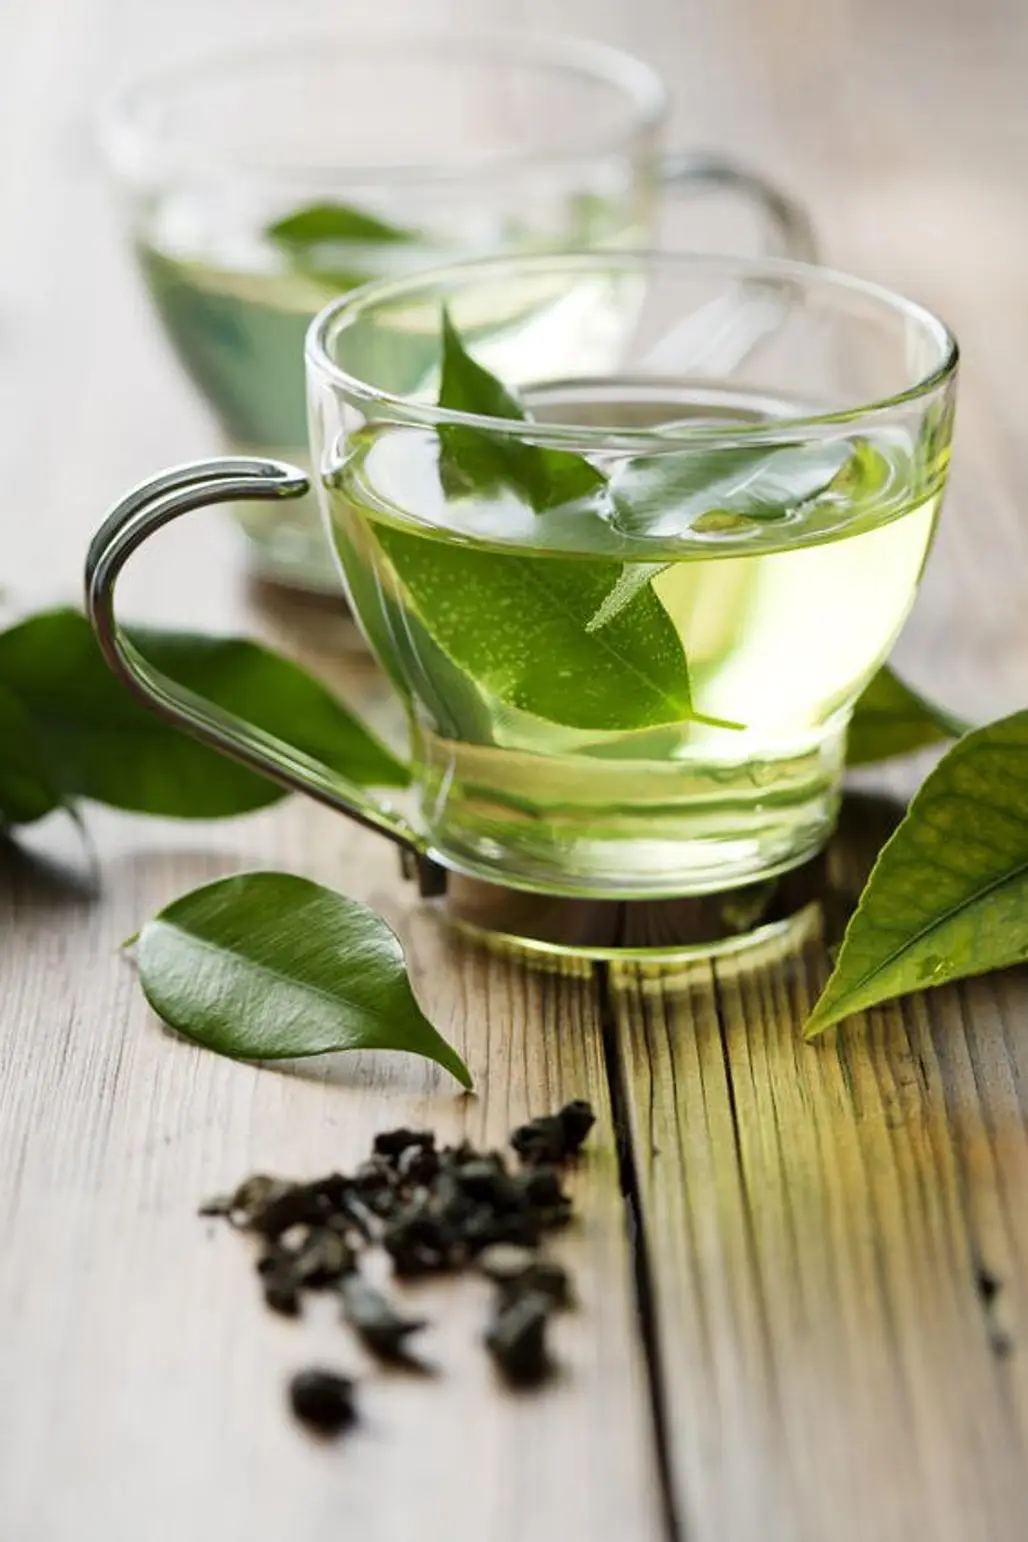 Sip a Mug of Green Tea for Great Skin